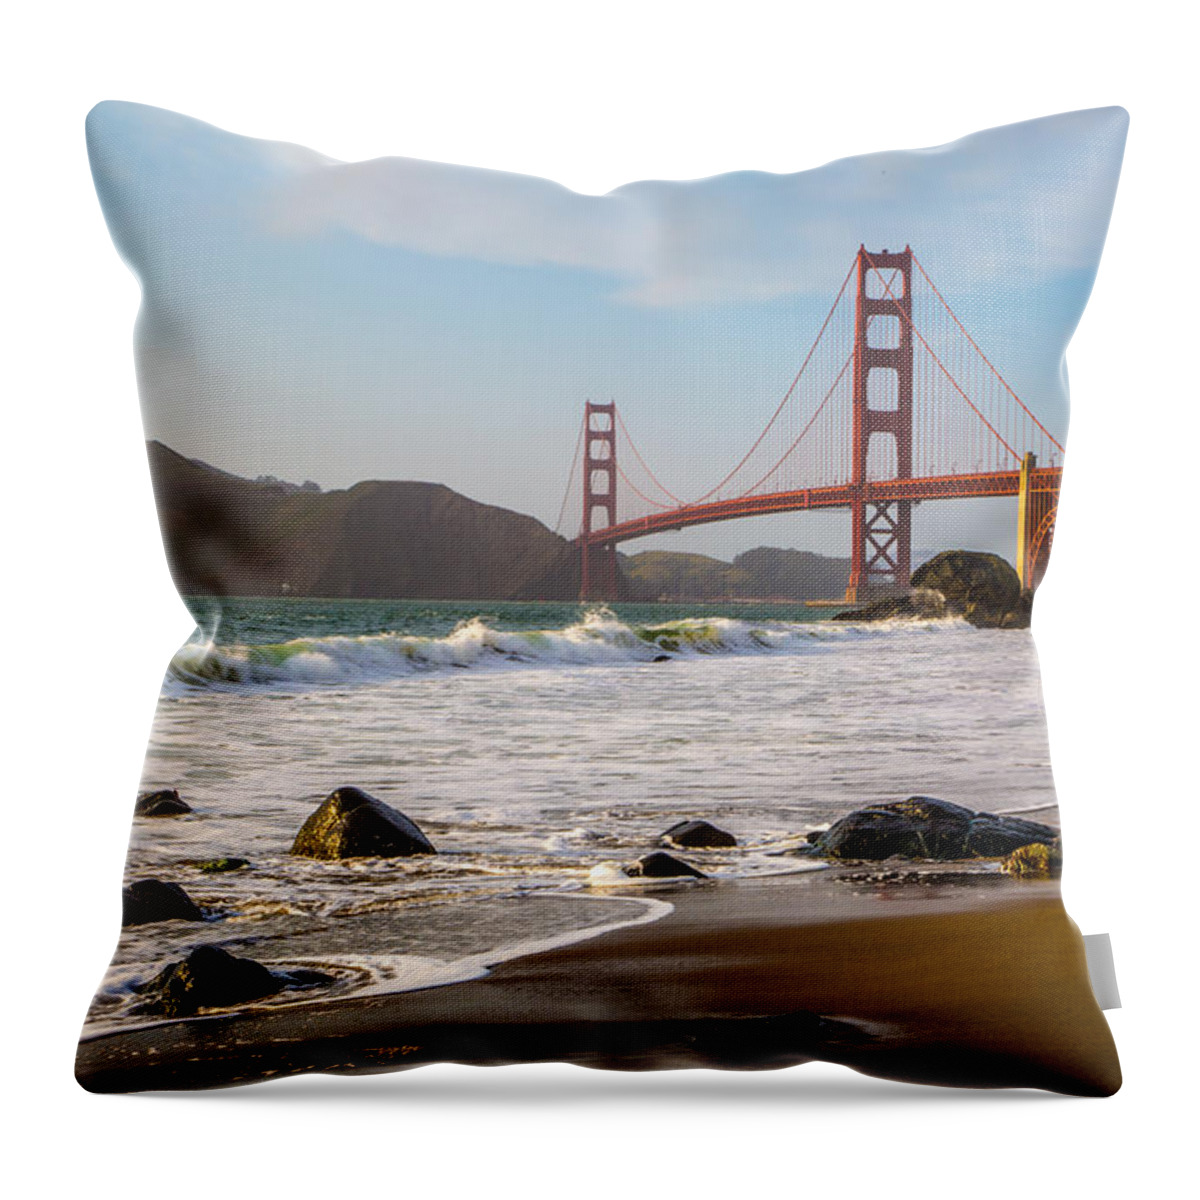 Golden Gate Bridge Throw Pillow featuring the photograph Golden Gate Bridge by Lev Kaytsner